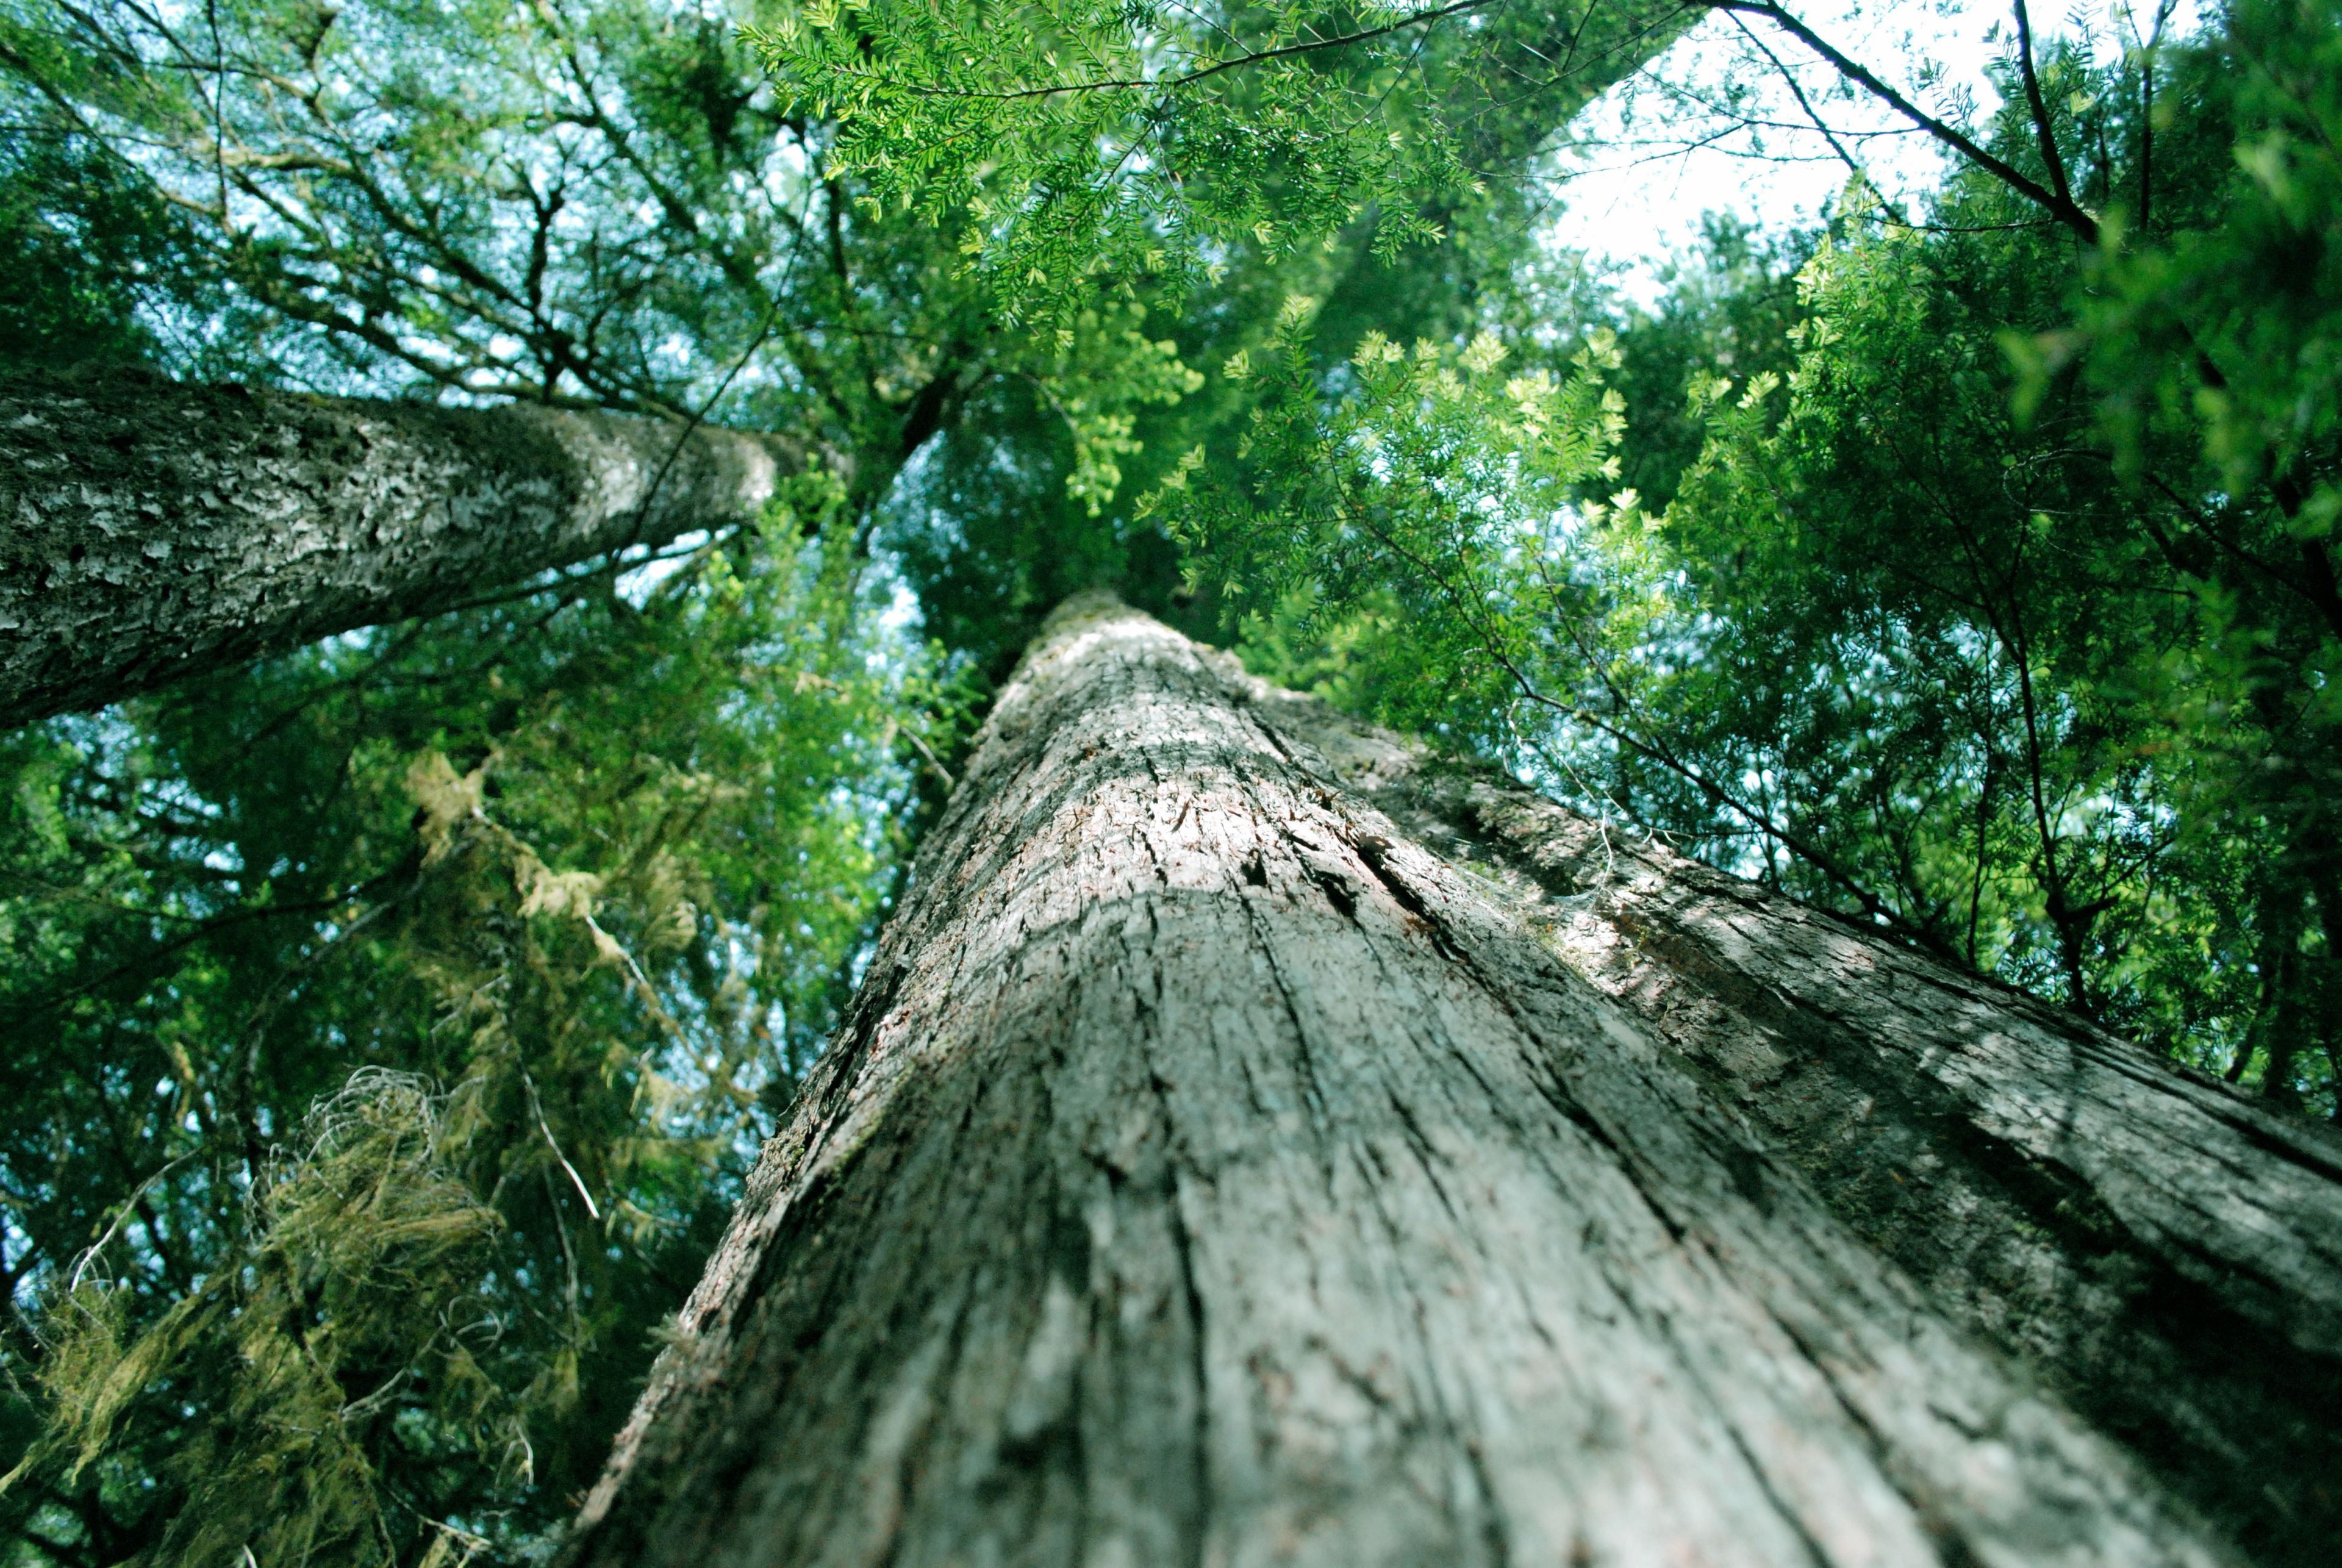 An upward view of the trunk of a cedar tree.  